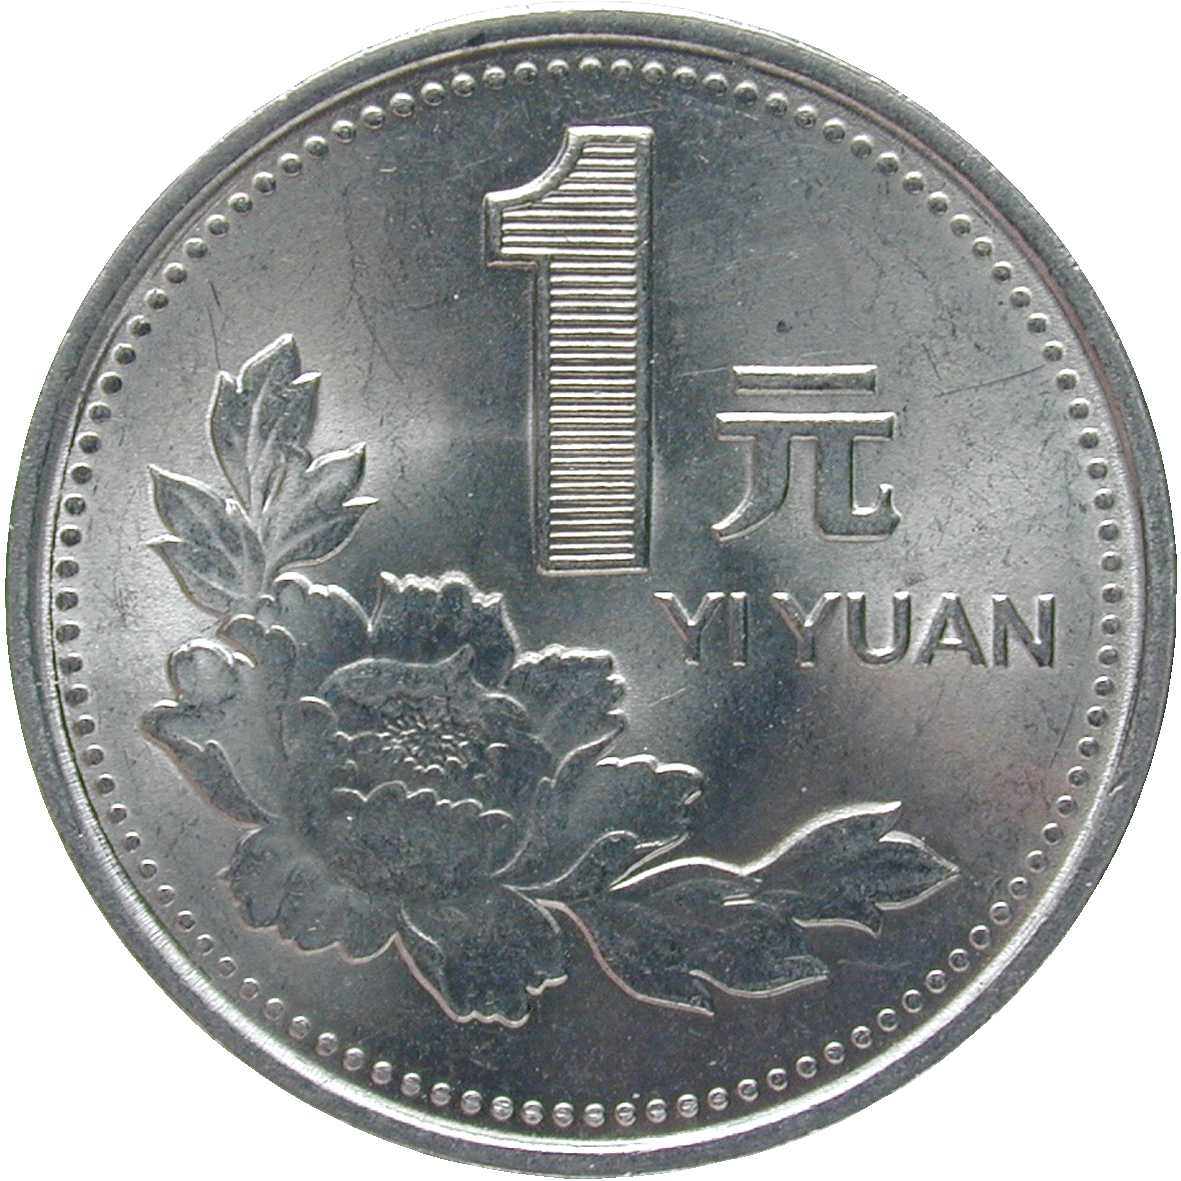 Peoples Republik of China, 1 Yuan 1995 (reverse)